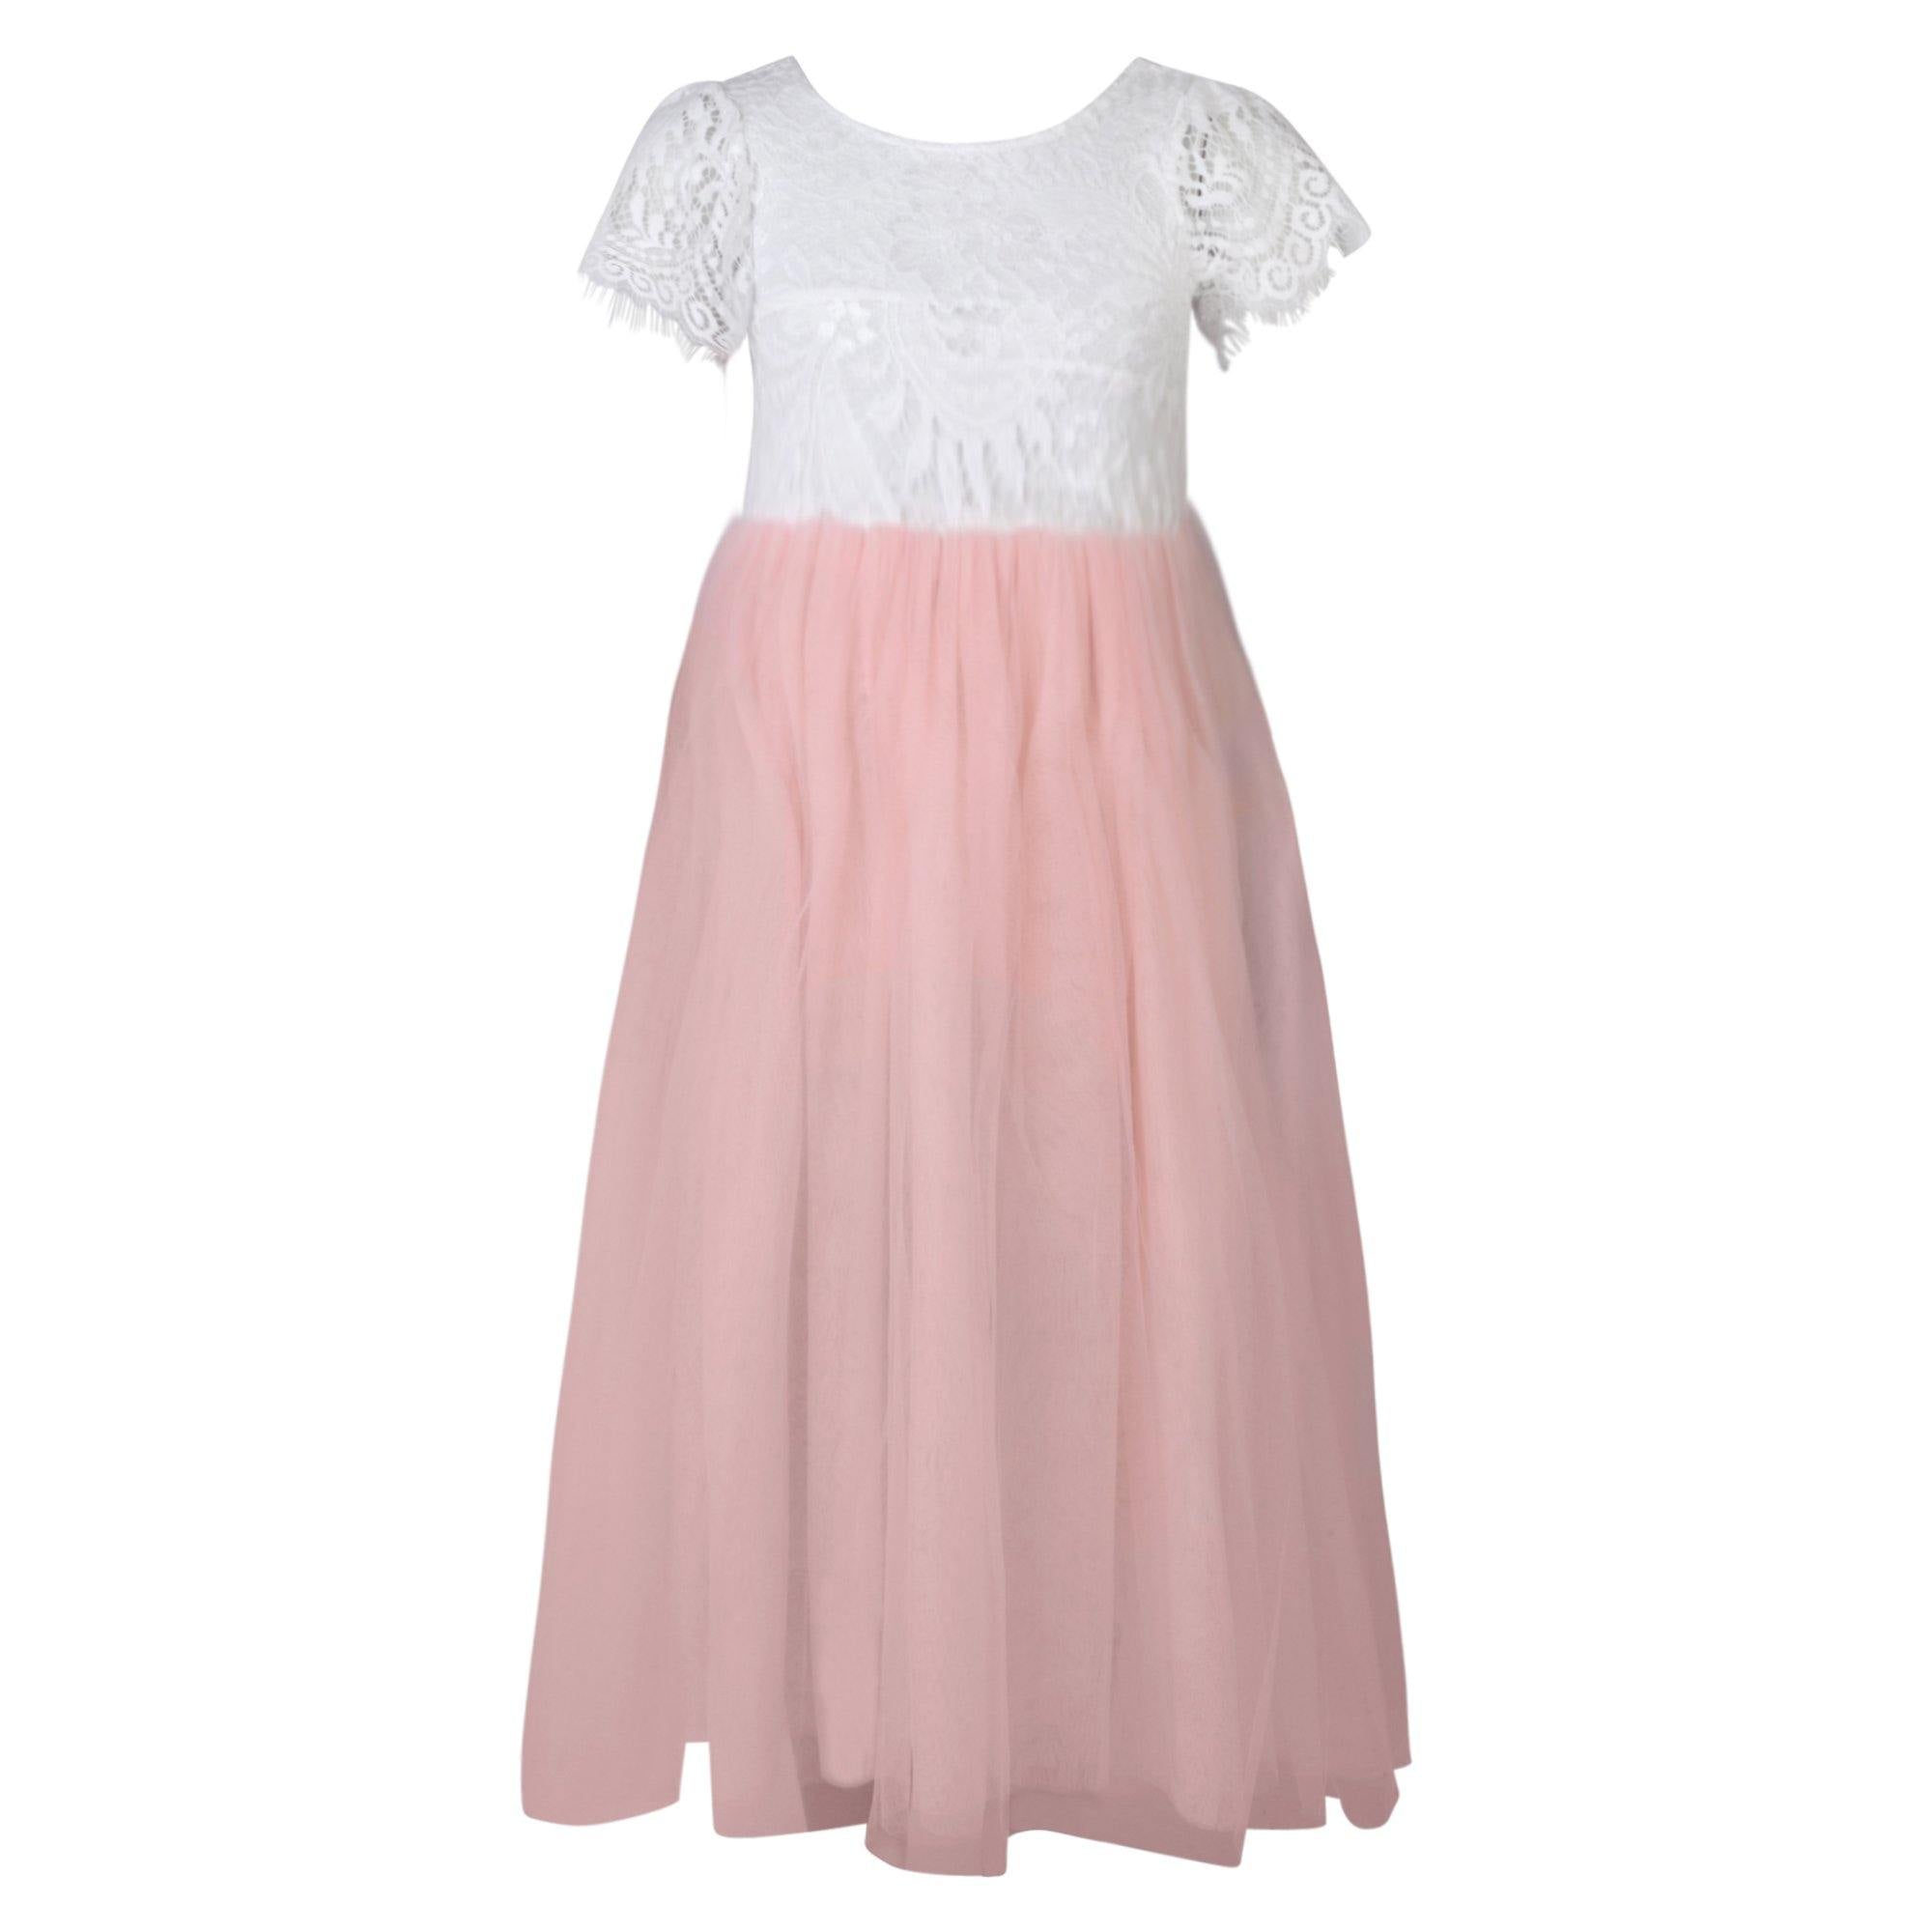 Bohemian Flutter Dress - Blush - UK Flower Girl Boutique